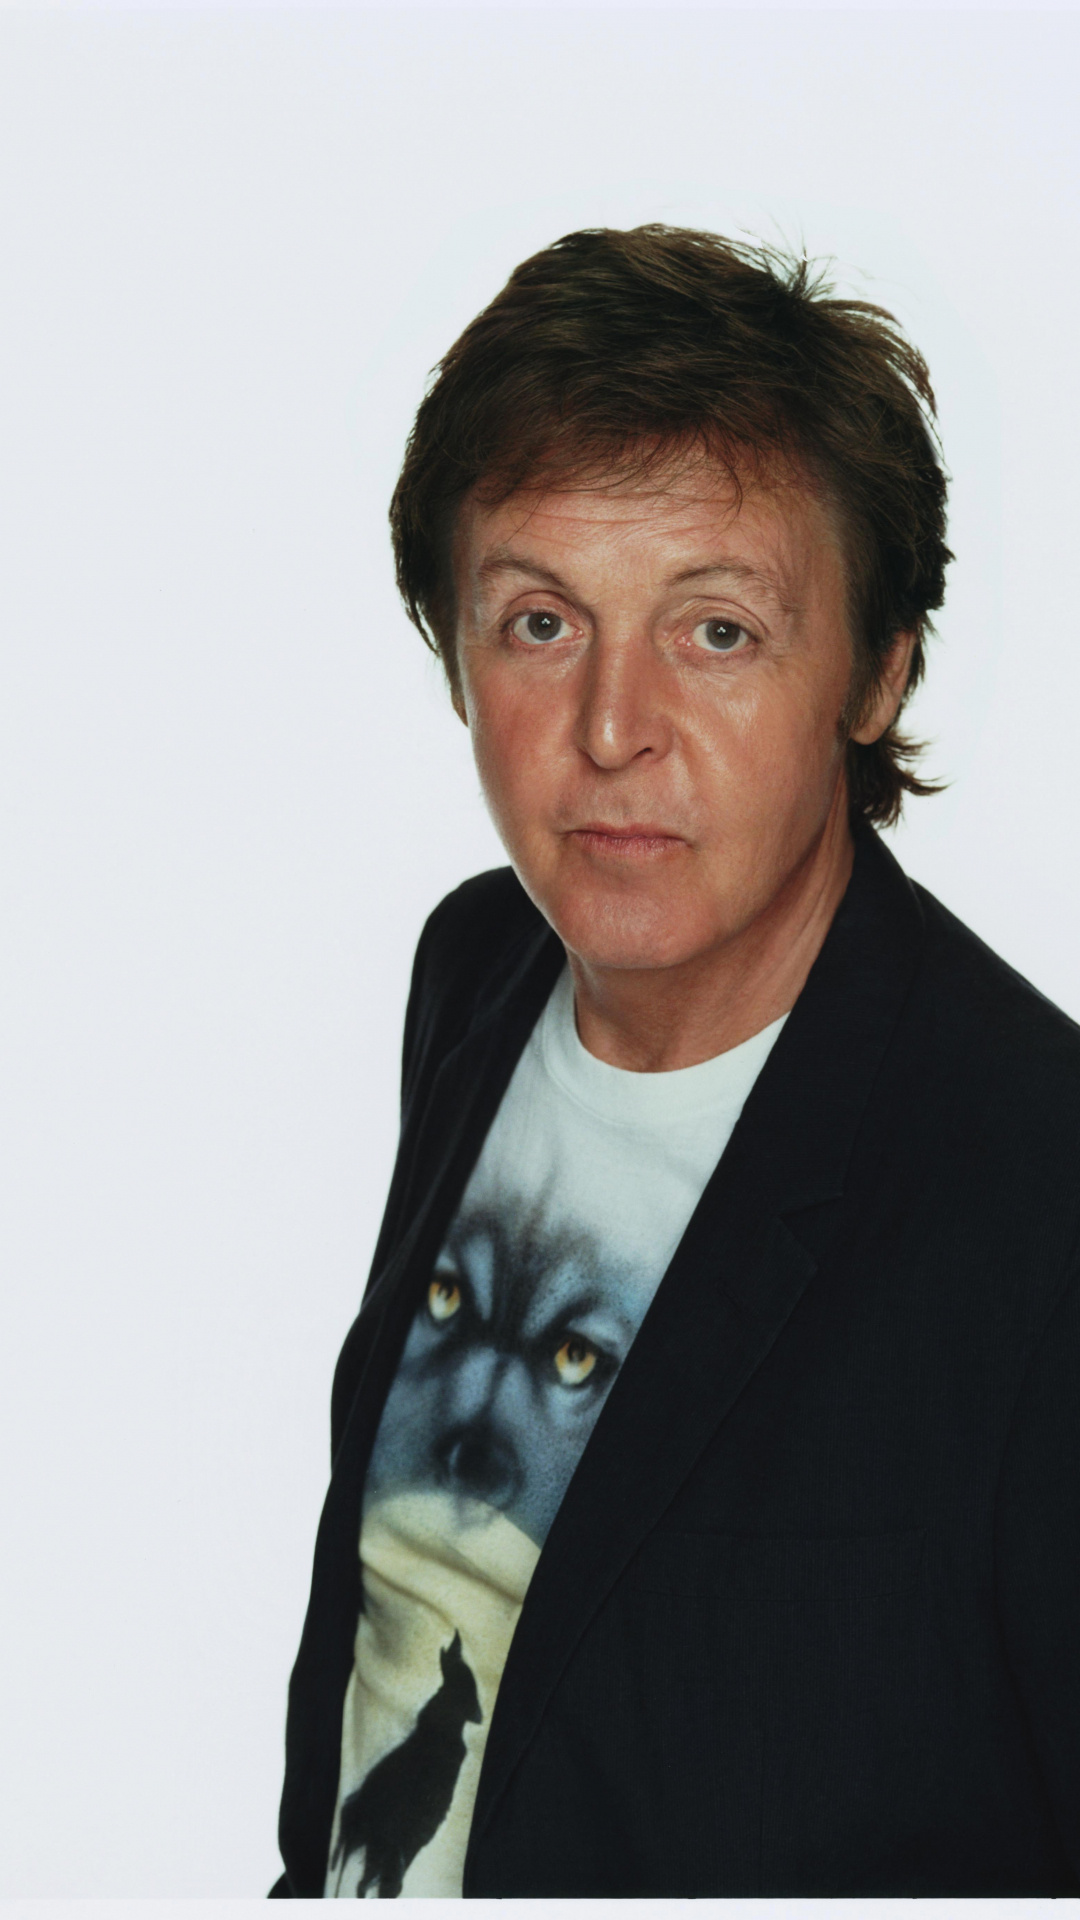 Free download, Paul McCartney images, Desktop, Mobile, 1080x1920 Full HD Handy